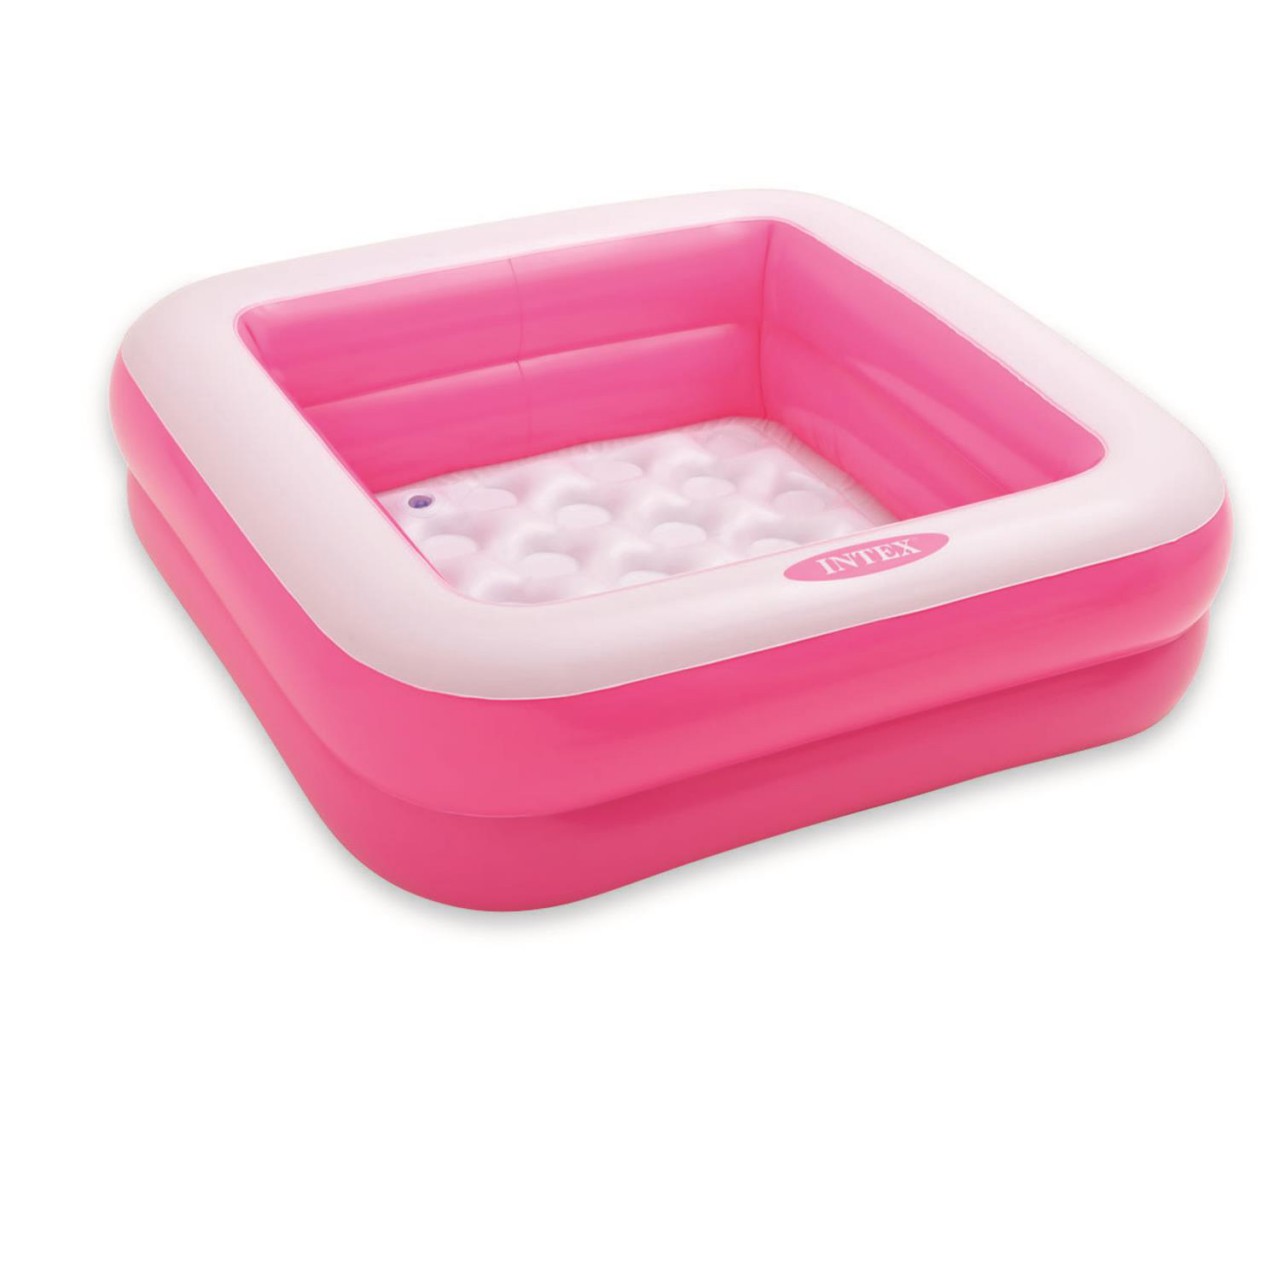 Intex Babypool Play Box Pool, Farblich Sortiert, 85 x 85 x 23 cm, Sortierte Farben